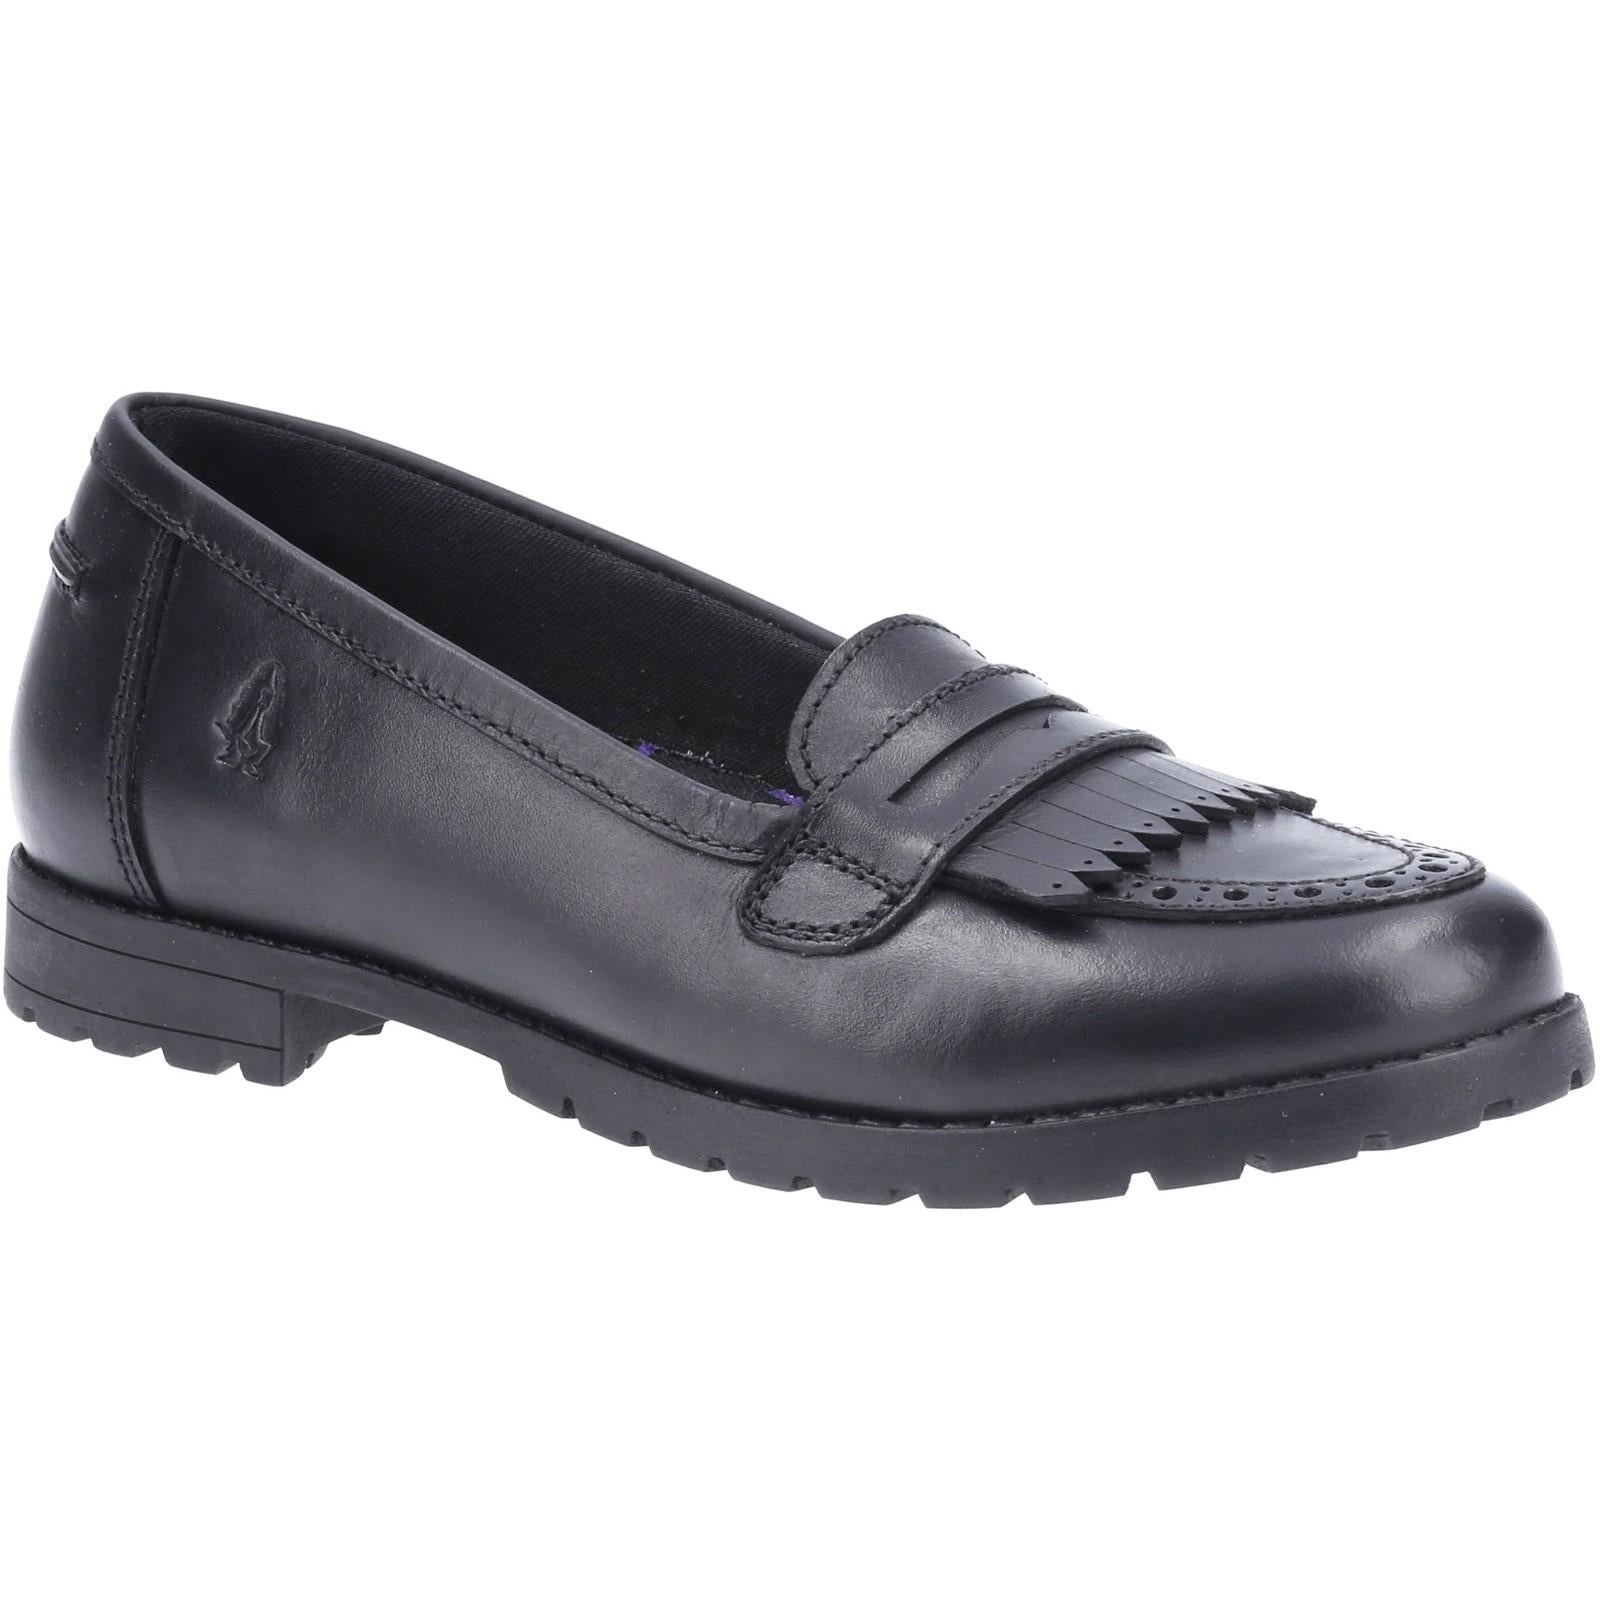 Hush Puppies Emer junior black leather comfortable slip on school shoe